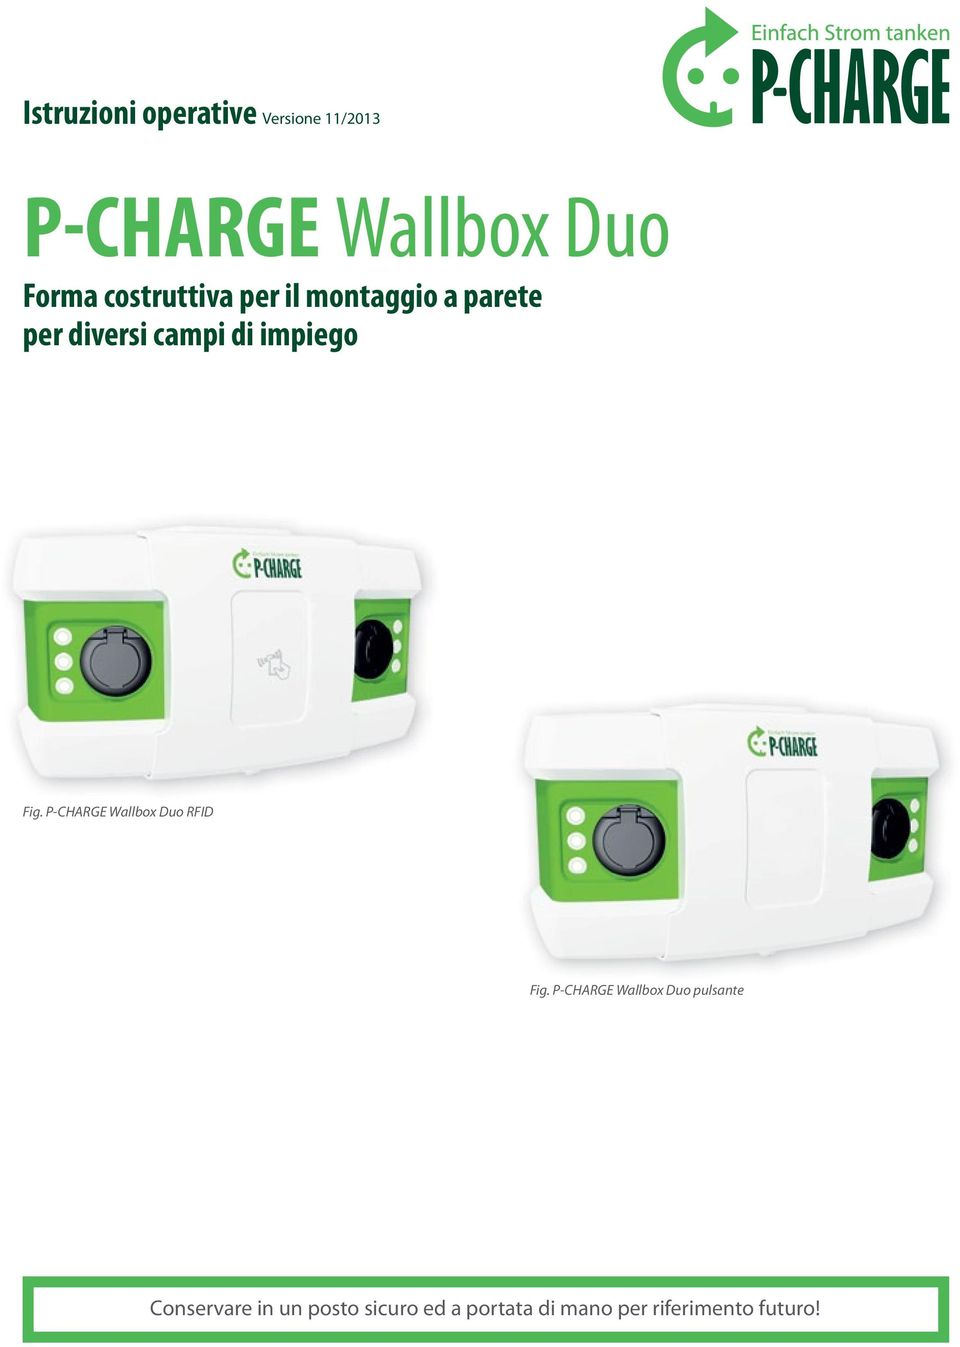 P-ChArge Wallbox Duo rfid Fig.